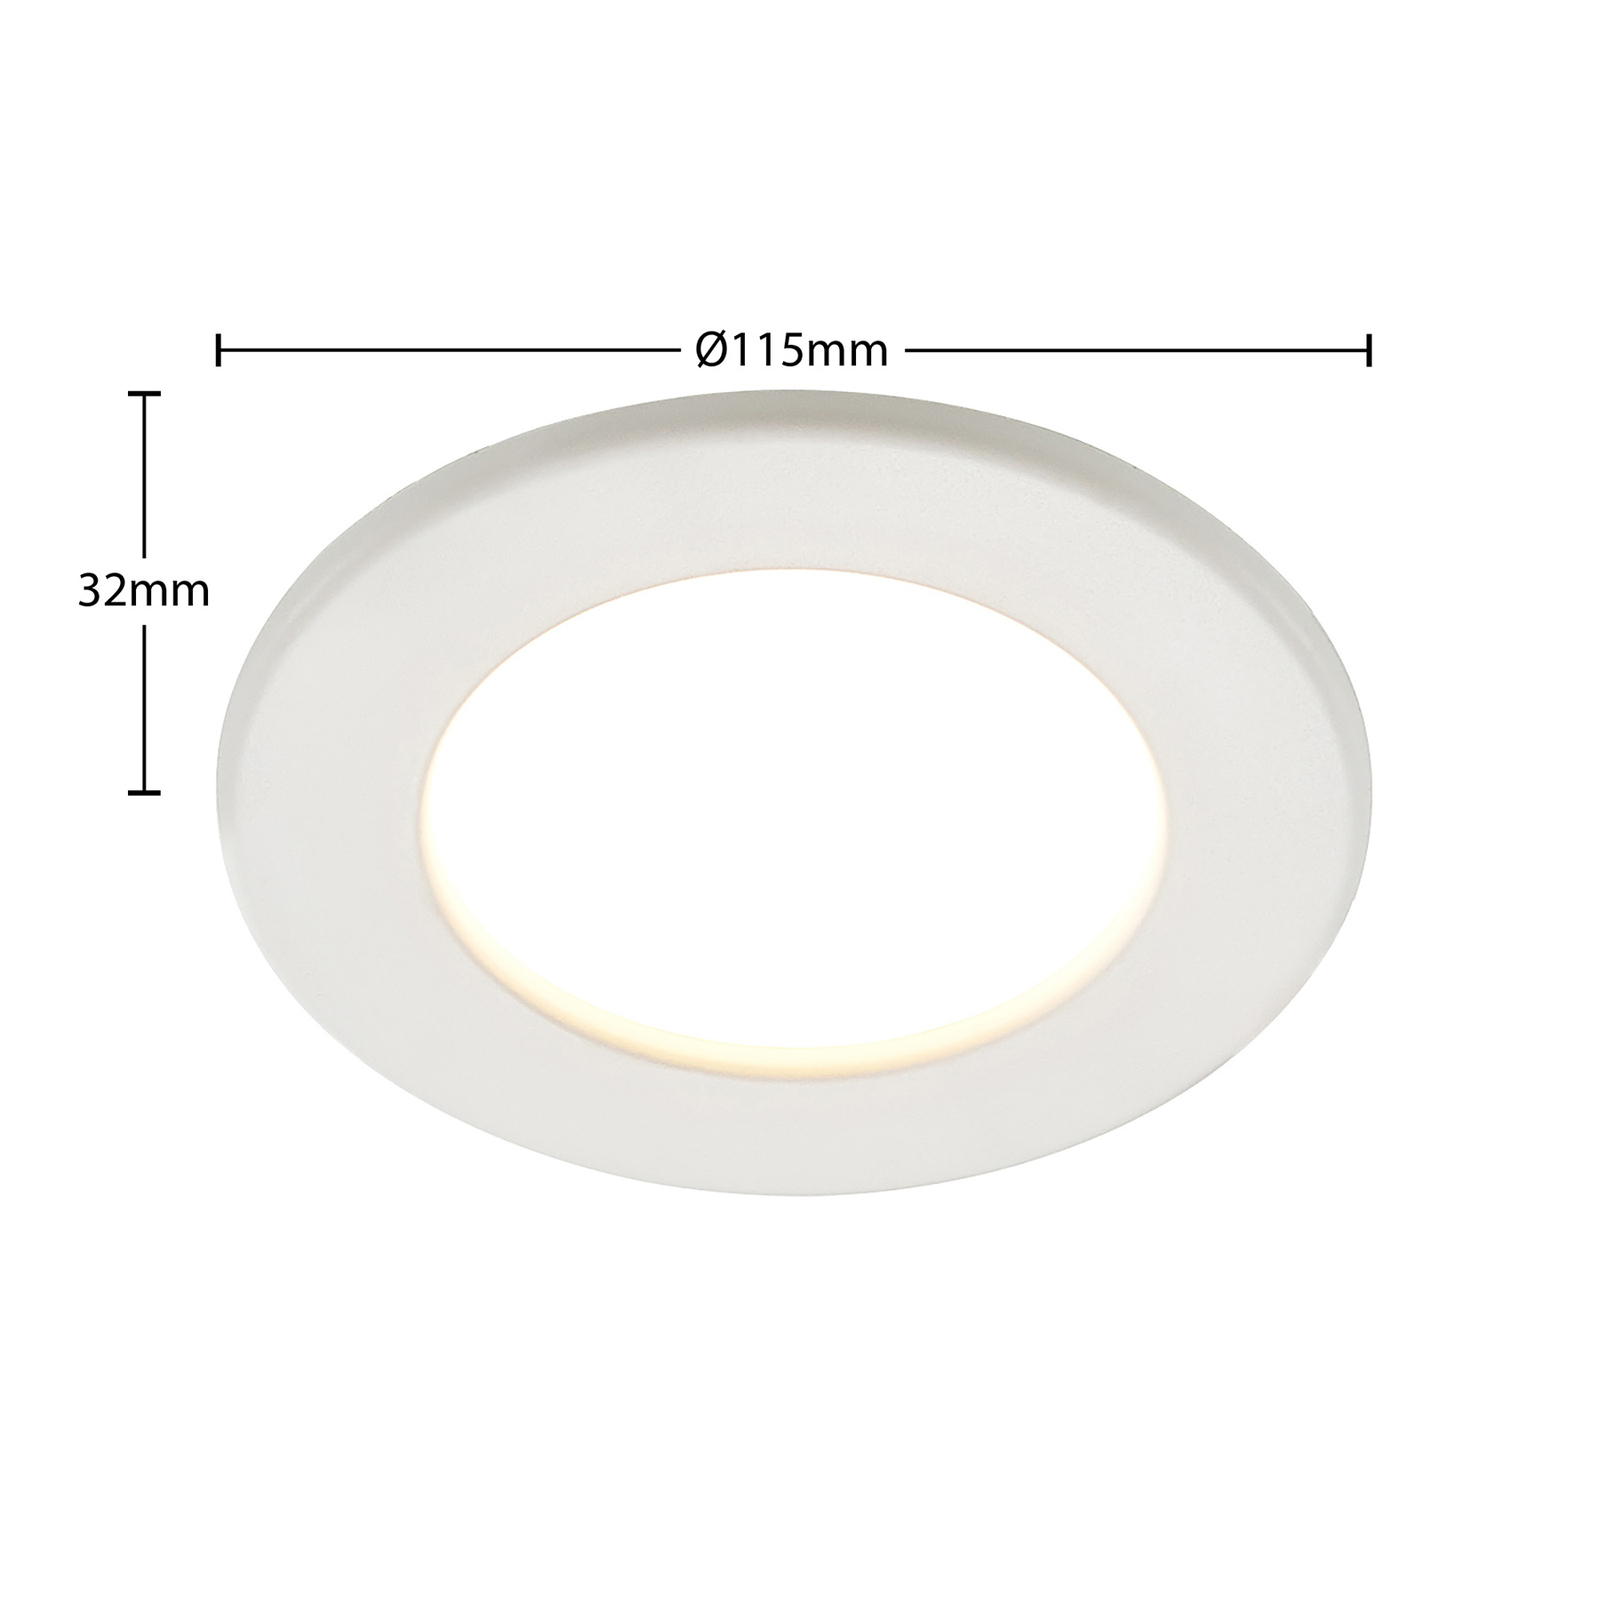 Prios Cadance -LED-uppovalo valk. 11,5 cm, 10 kpl